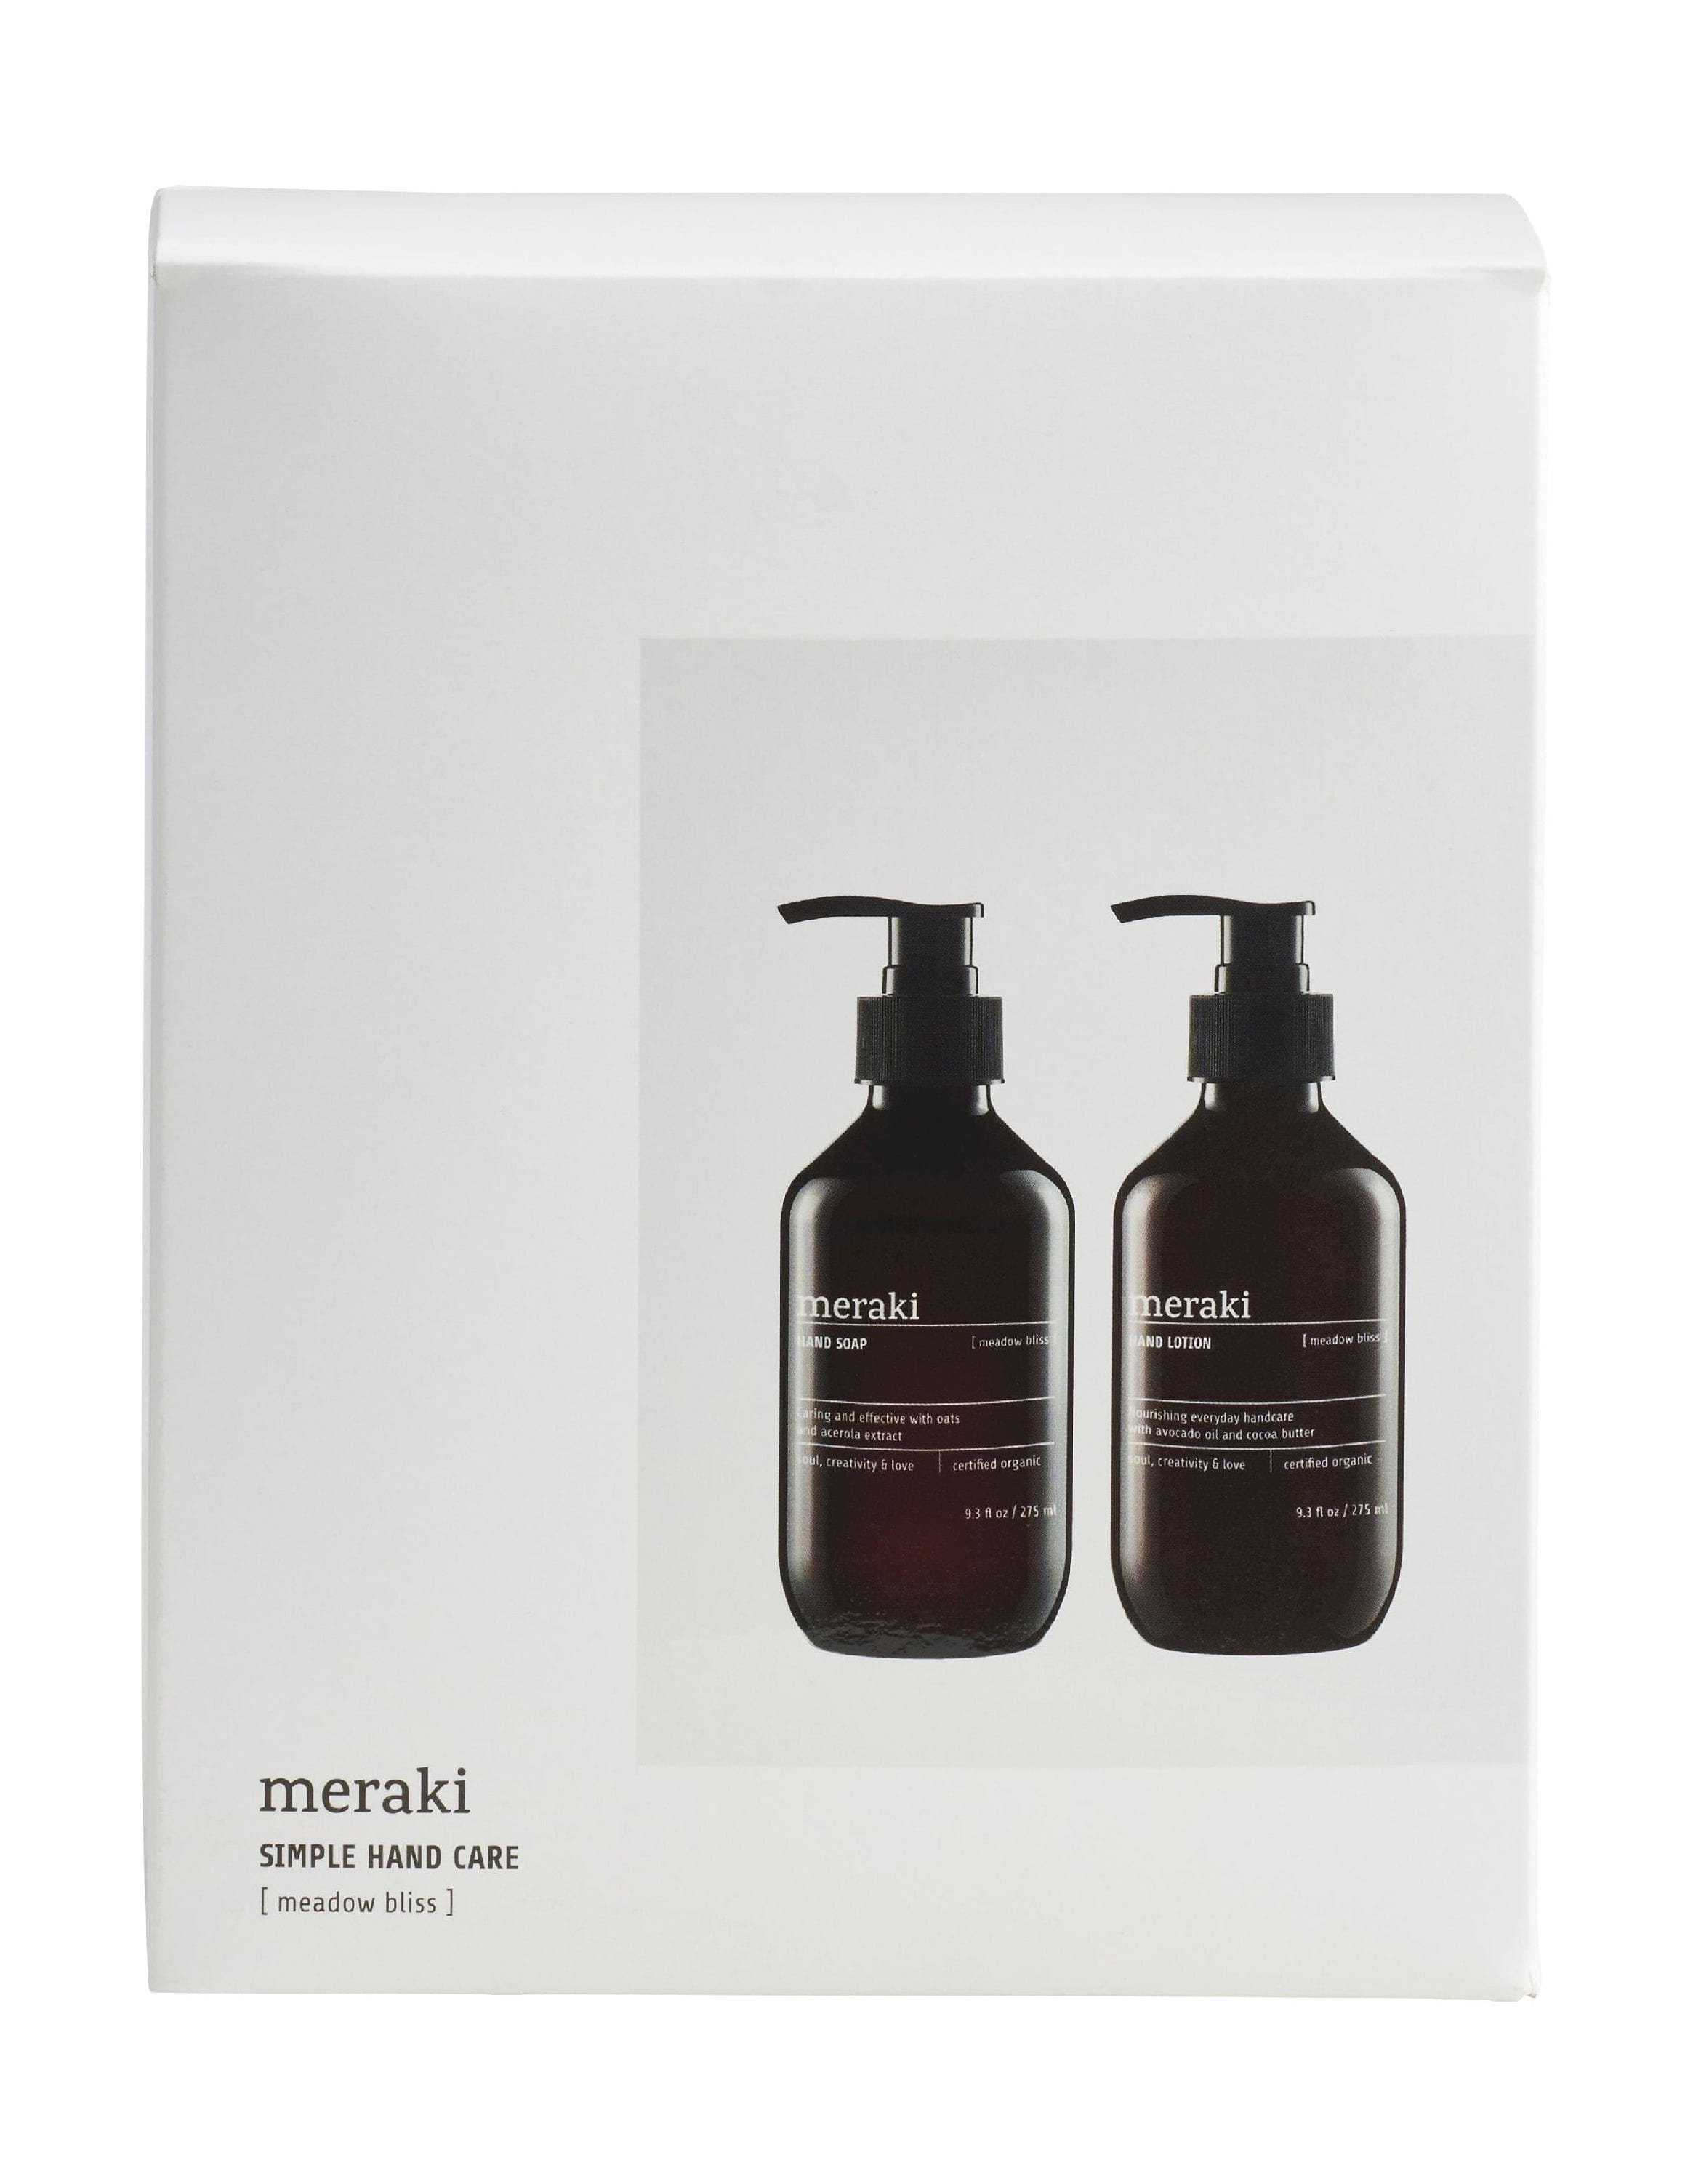 Meraki Simply Hand Care Gift Box 275/275 Ml, Meadow Bliss